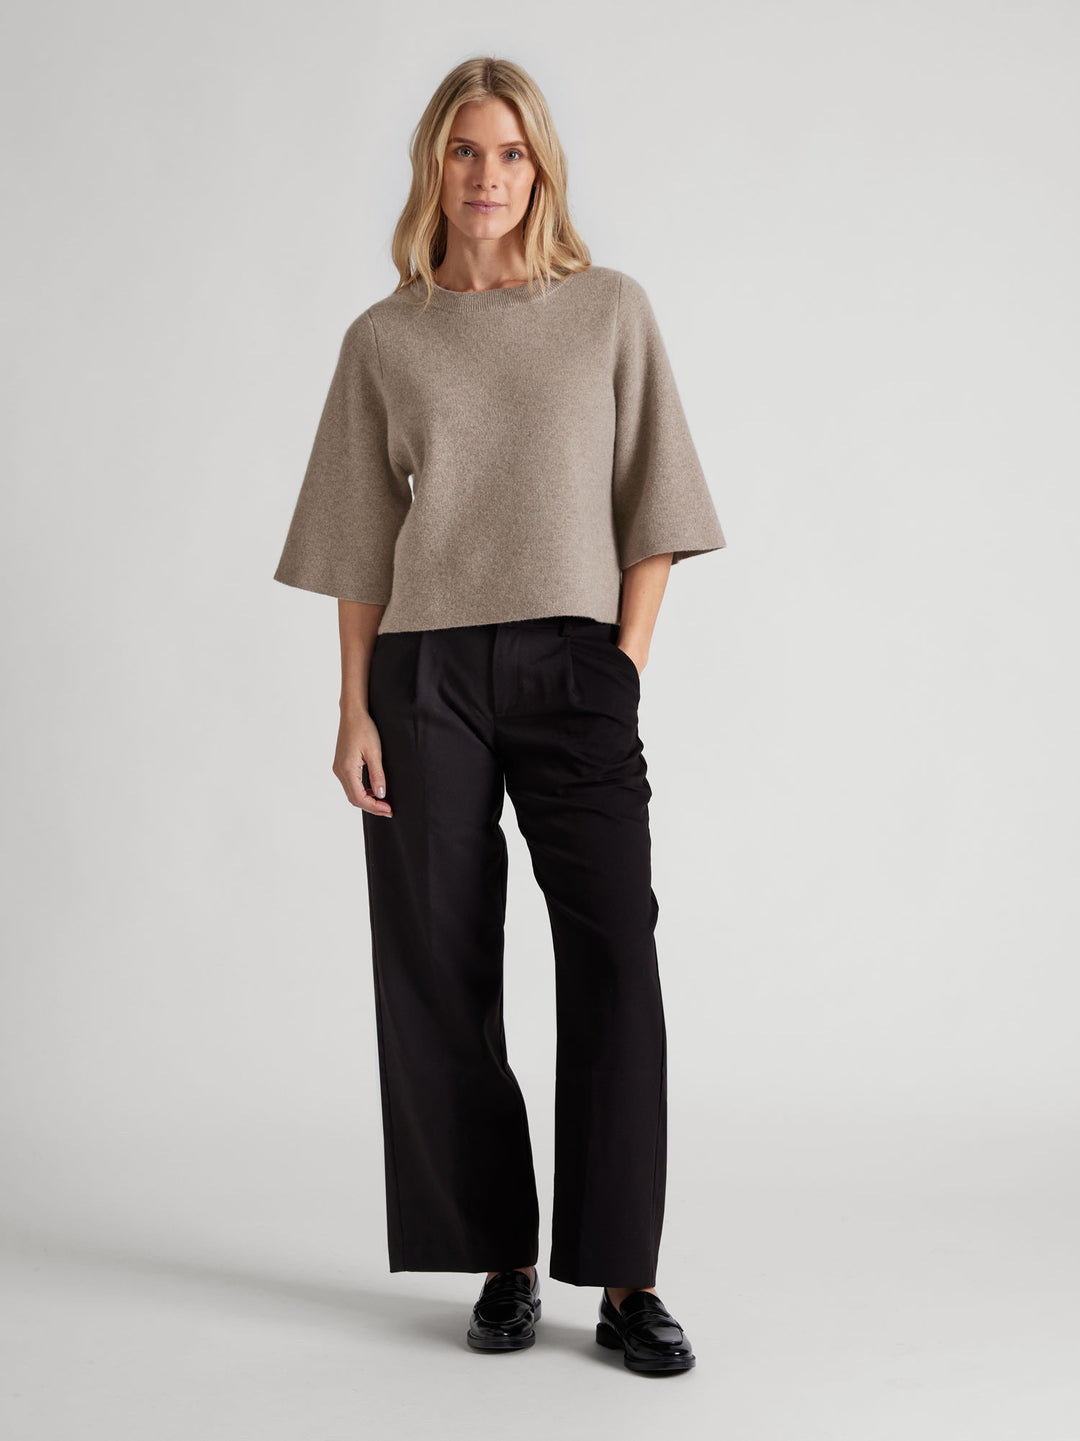 Cashmere sweater "Dina" in 100% pure cashmere. Scandinavian design by Kashmina. Color: Toast.